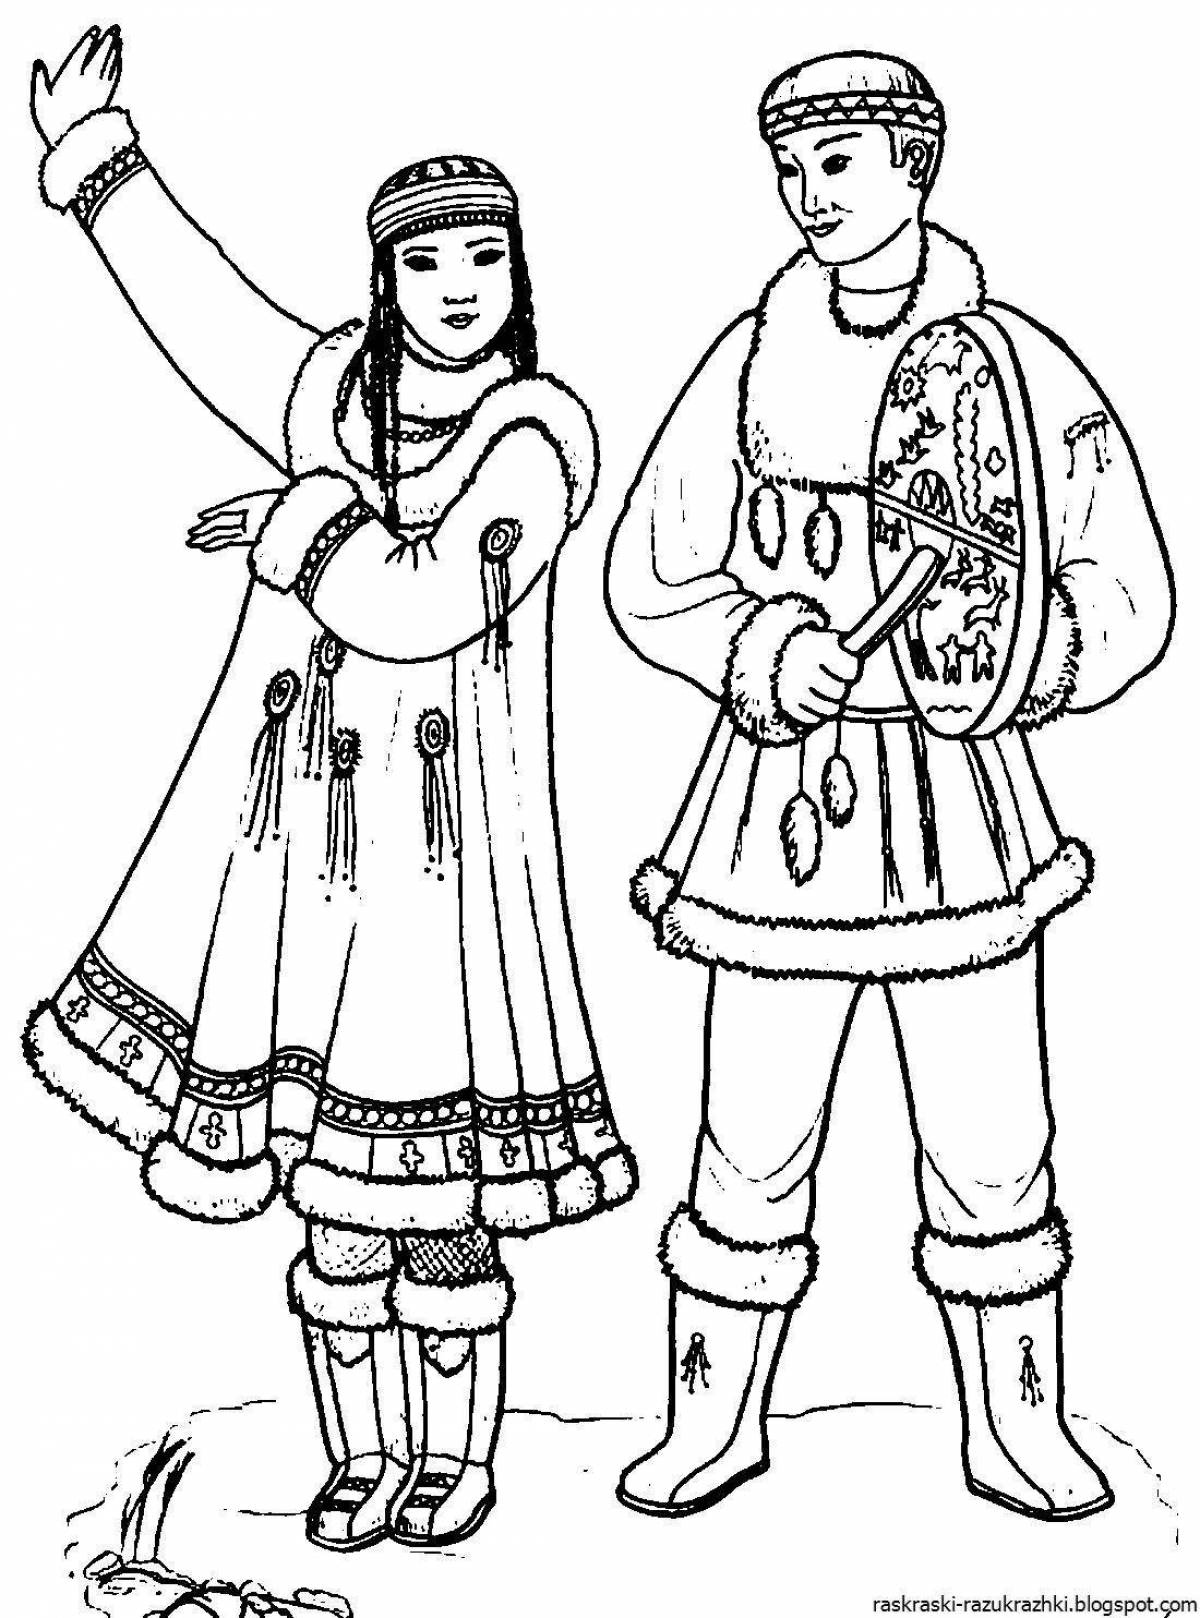 Coloring page joyful Udmurt national costume